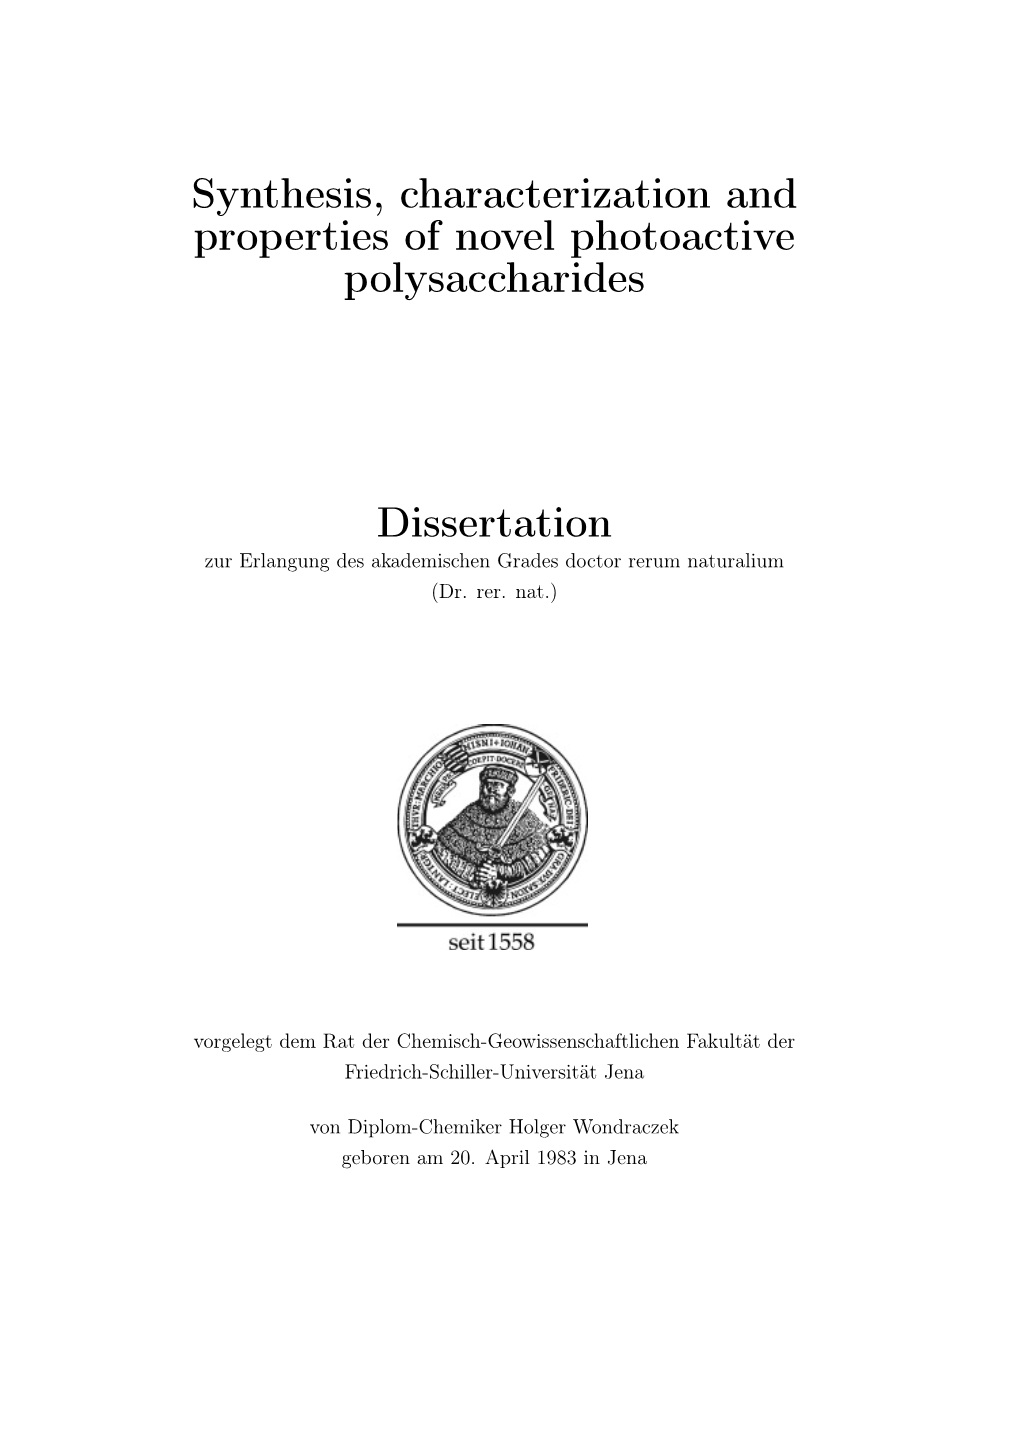 Synthesis, Characterization and Properties of Novel Photoactive Polysaccharides